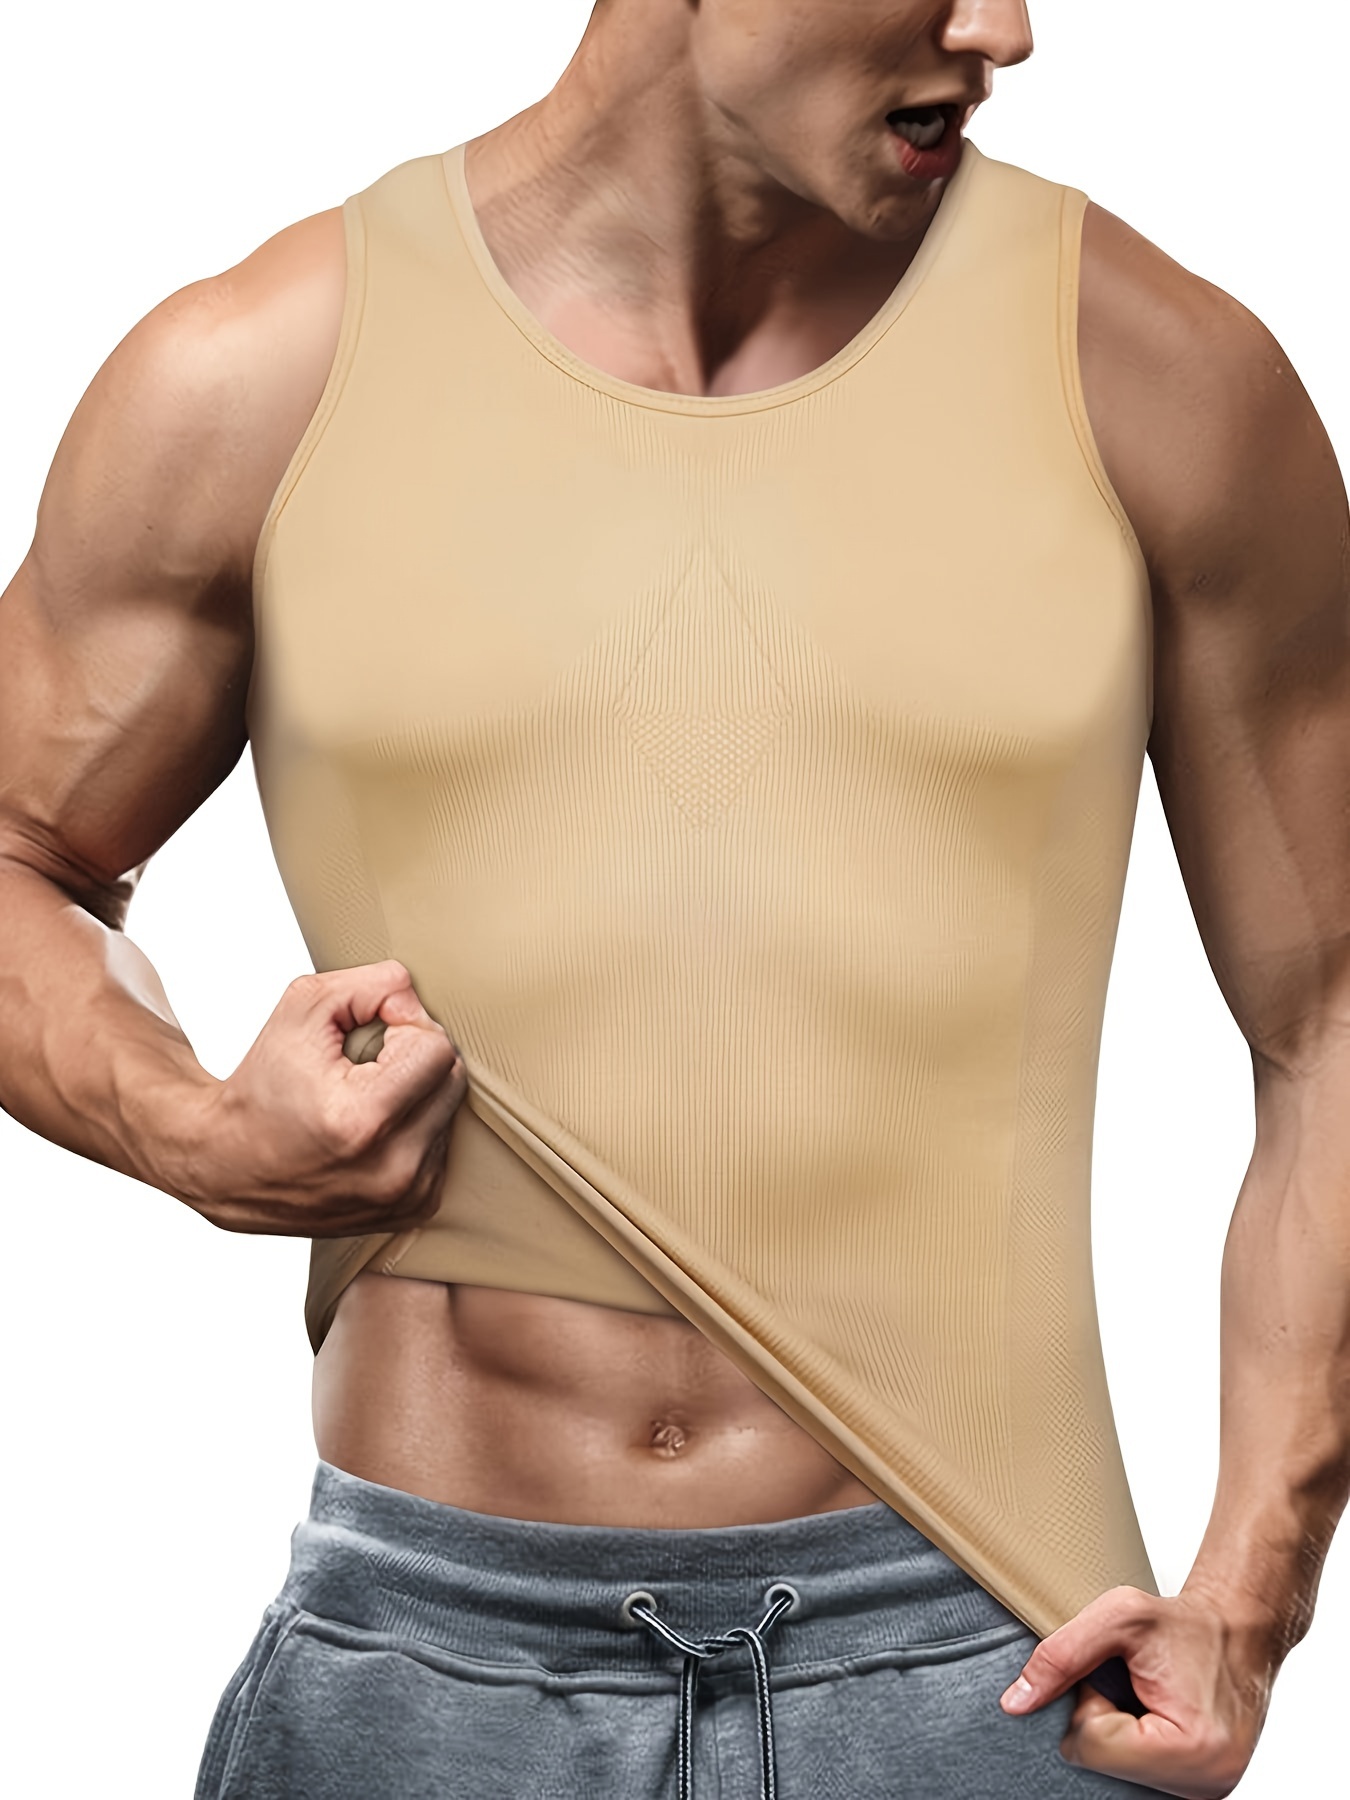 Esteem Apparel New Mens Compression Shirt Slimming Body Shapewear